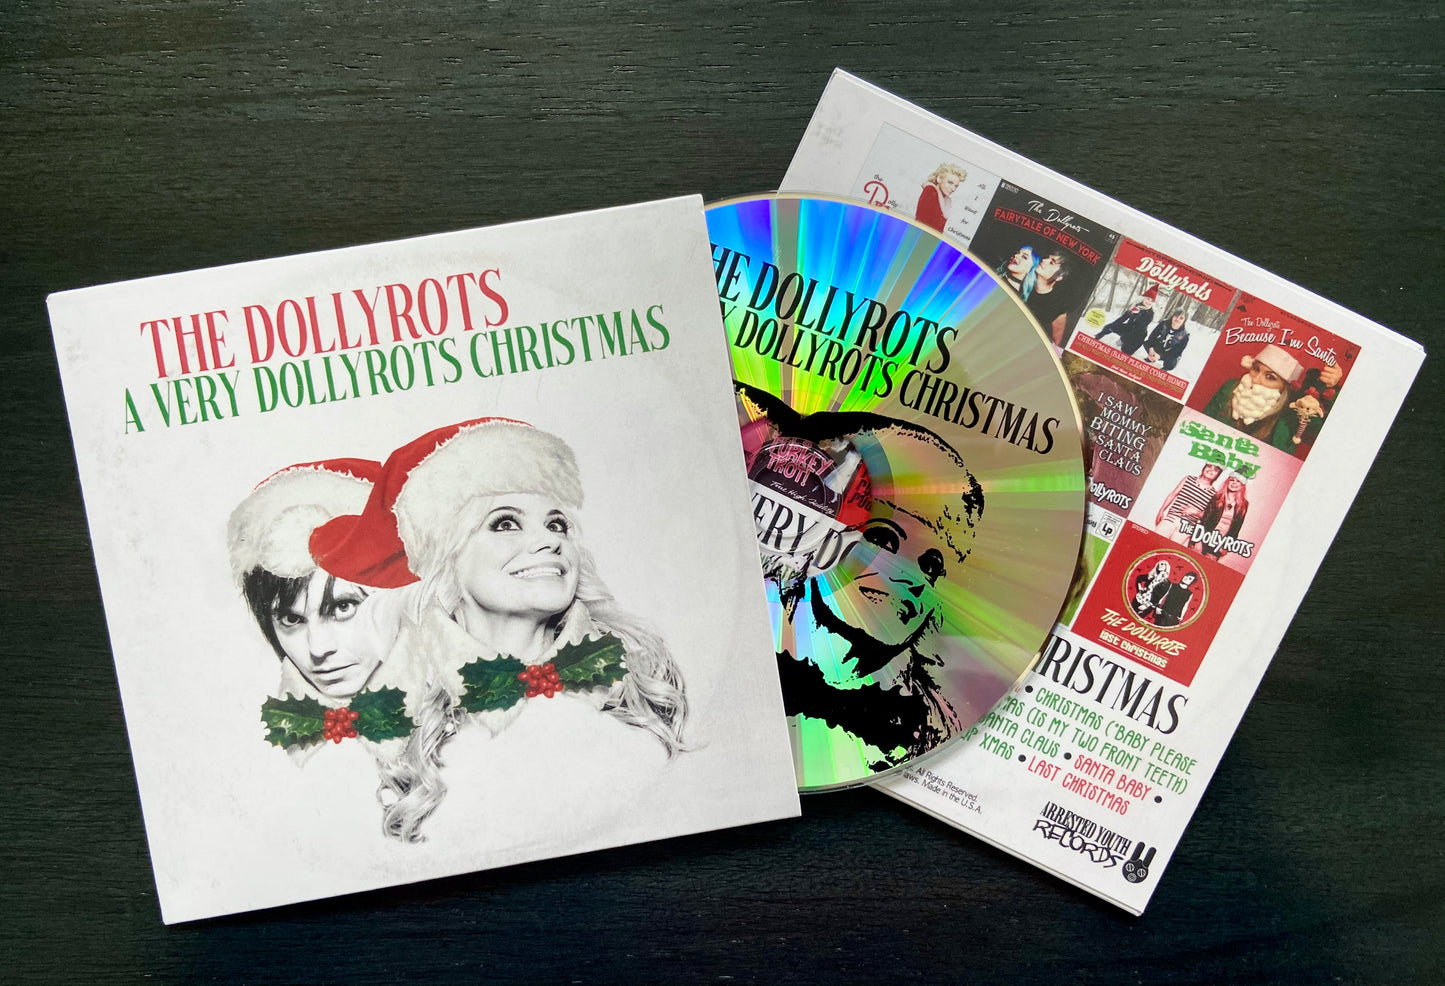 "A Very Dollyrots Christmas" CD